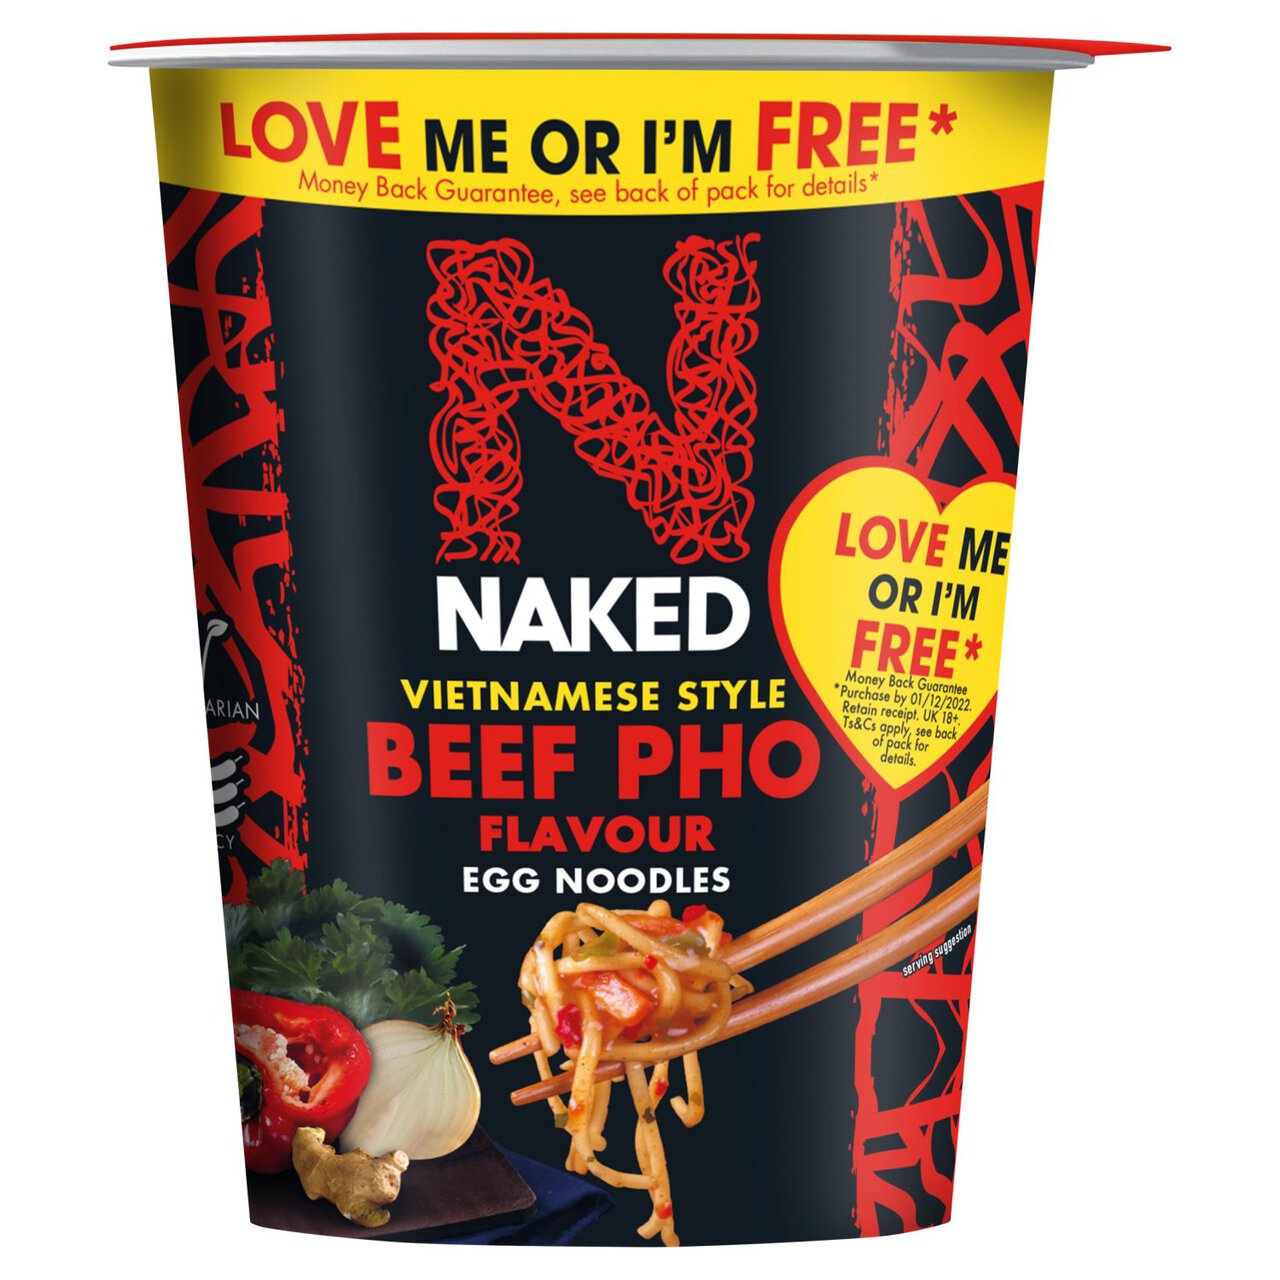 Naked Noodle Beef Pho 78g